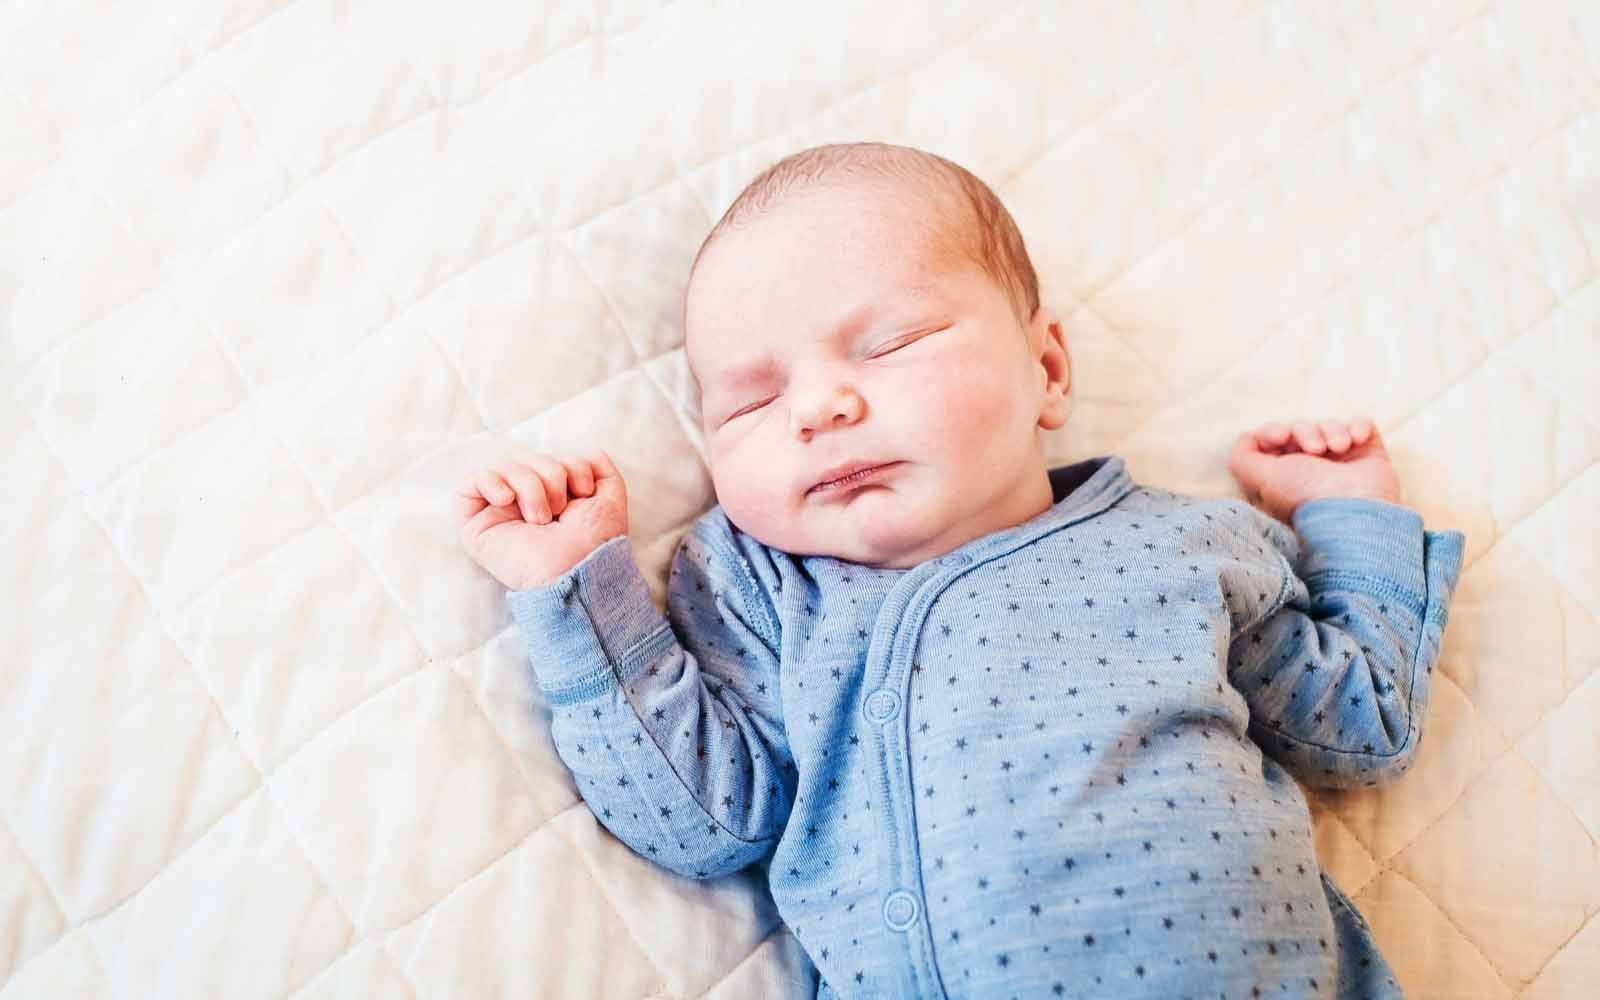 How do I get my baby to sleep?